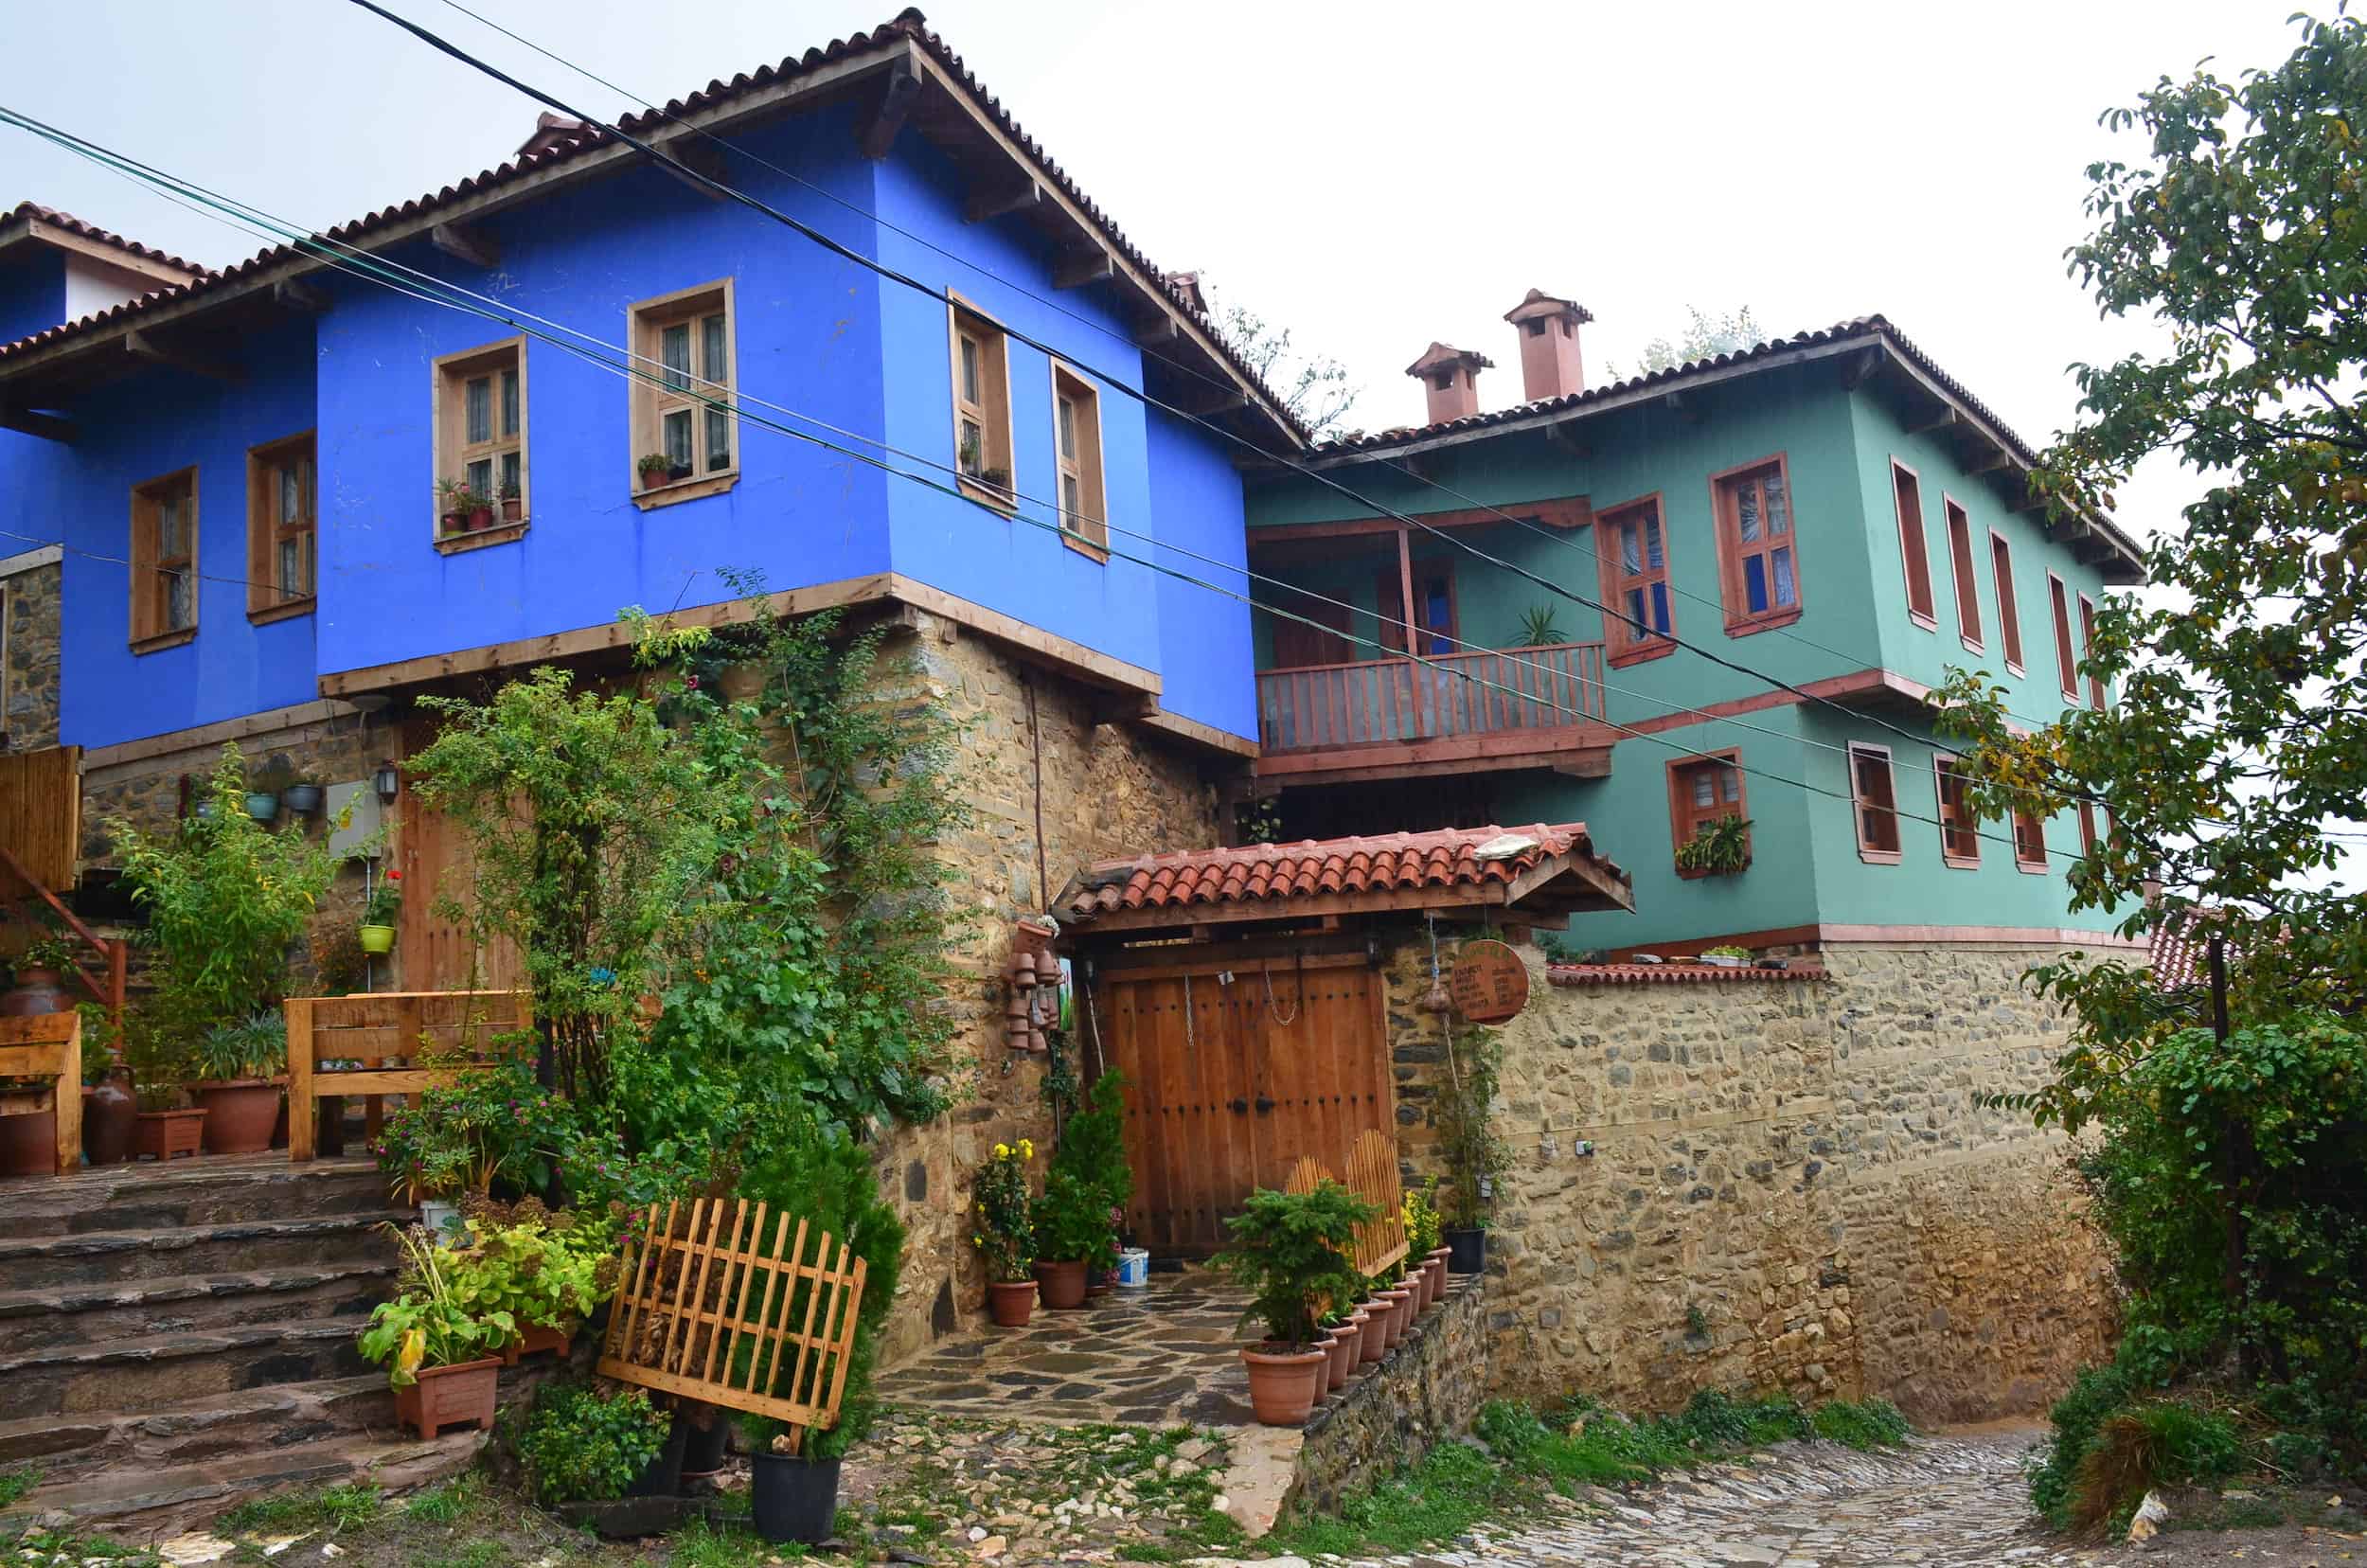 Ottoman homes in Cumalıkızık, Bursa, Turkey